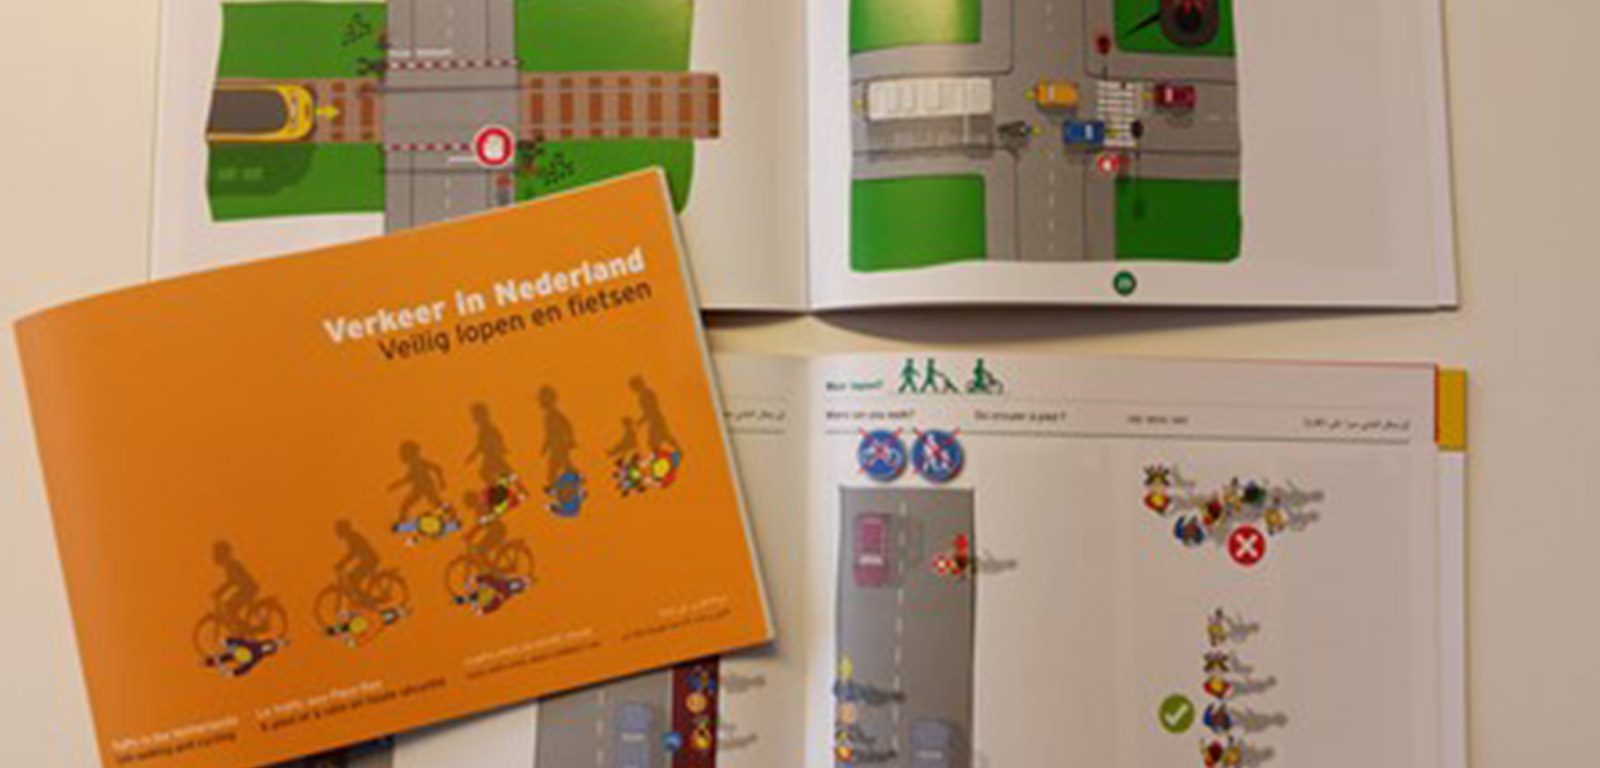 brochure verkeer in nederland